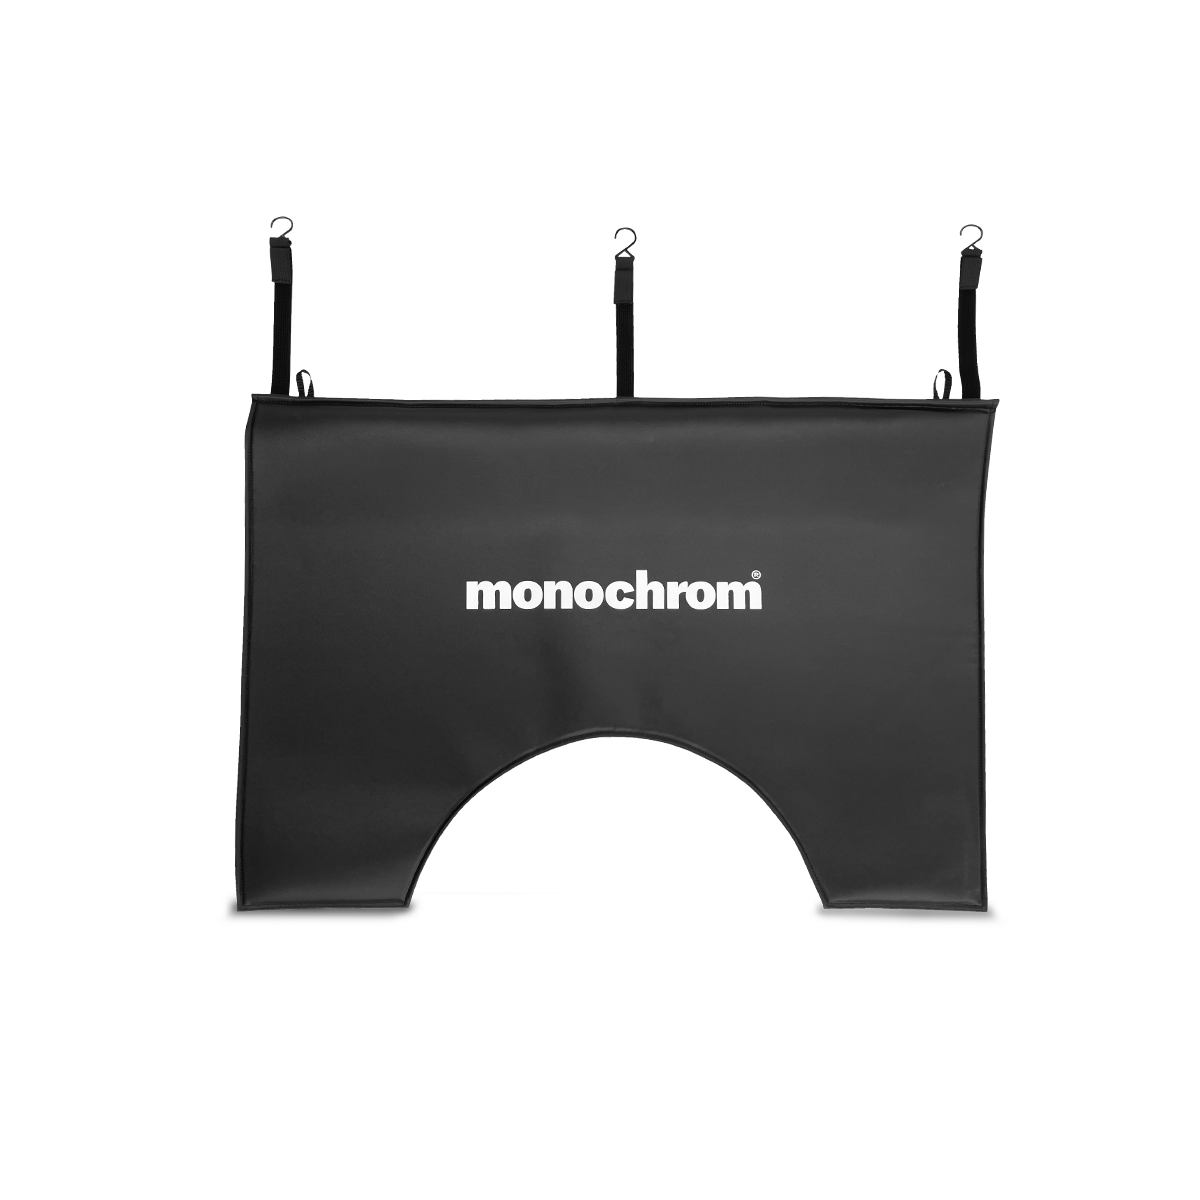 monochrom – So sieht Premium aus